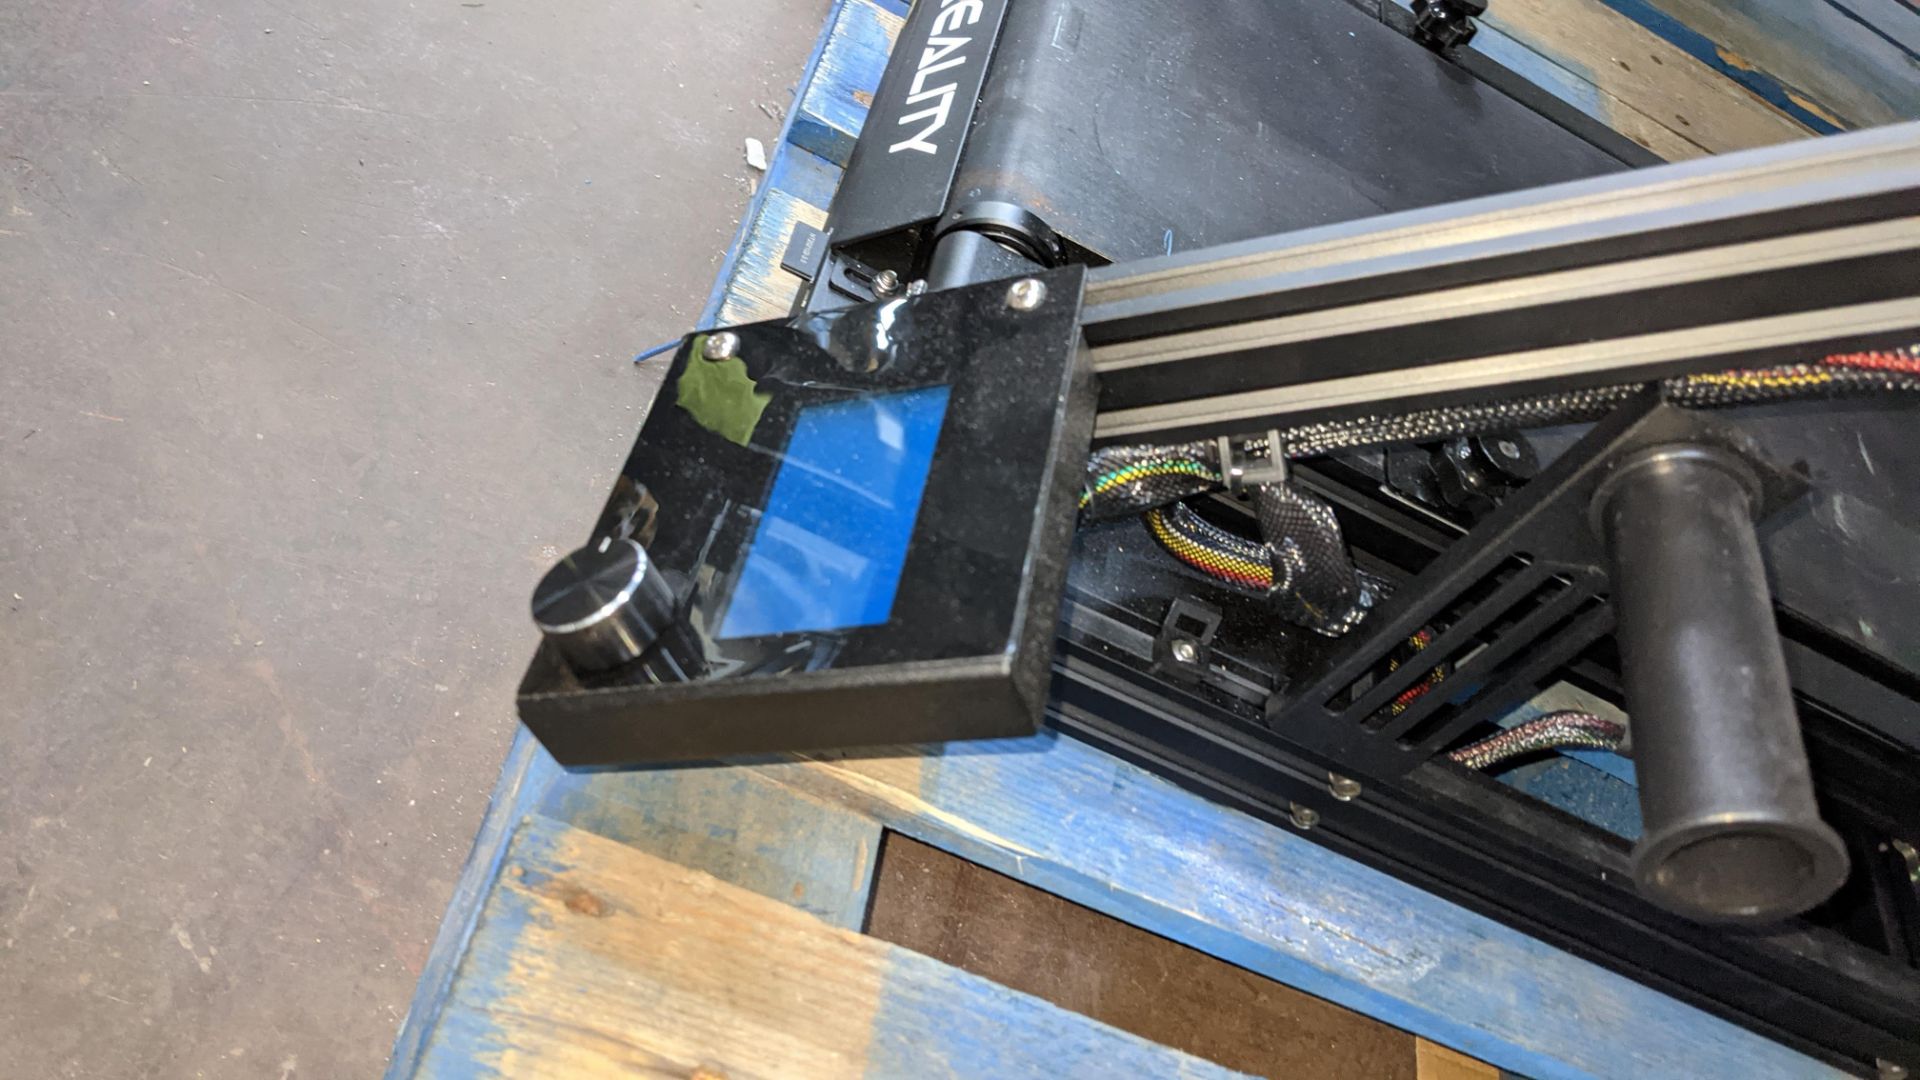 Creality 3D printer with conveyor/belt drive - Image 9 of 15